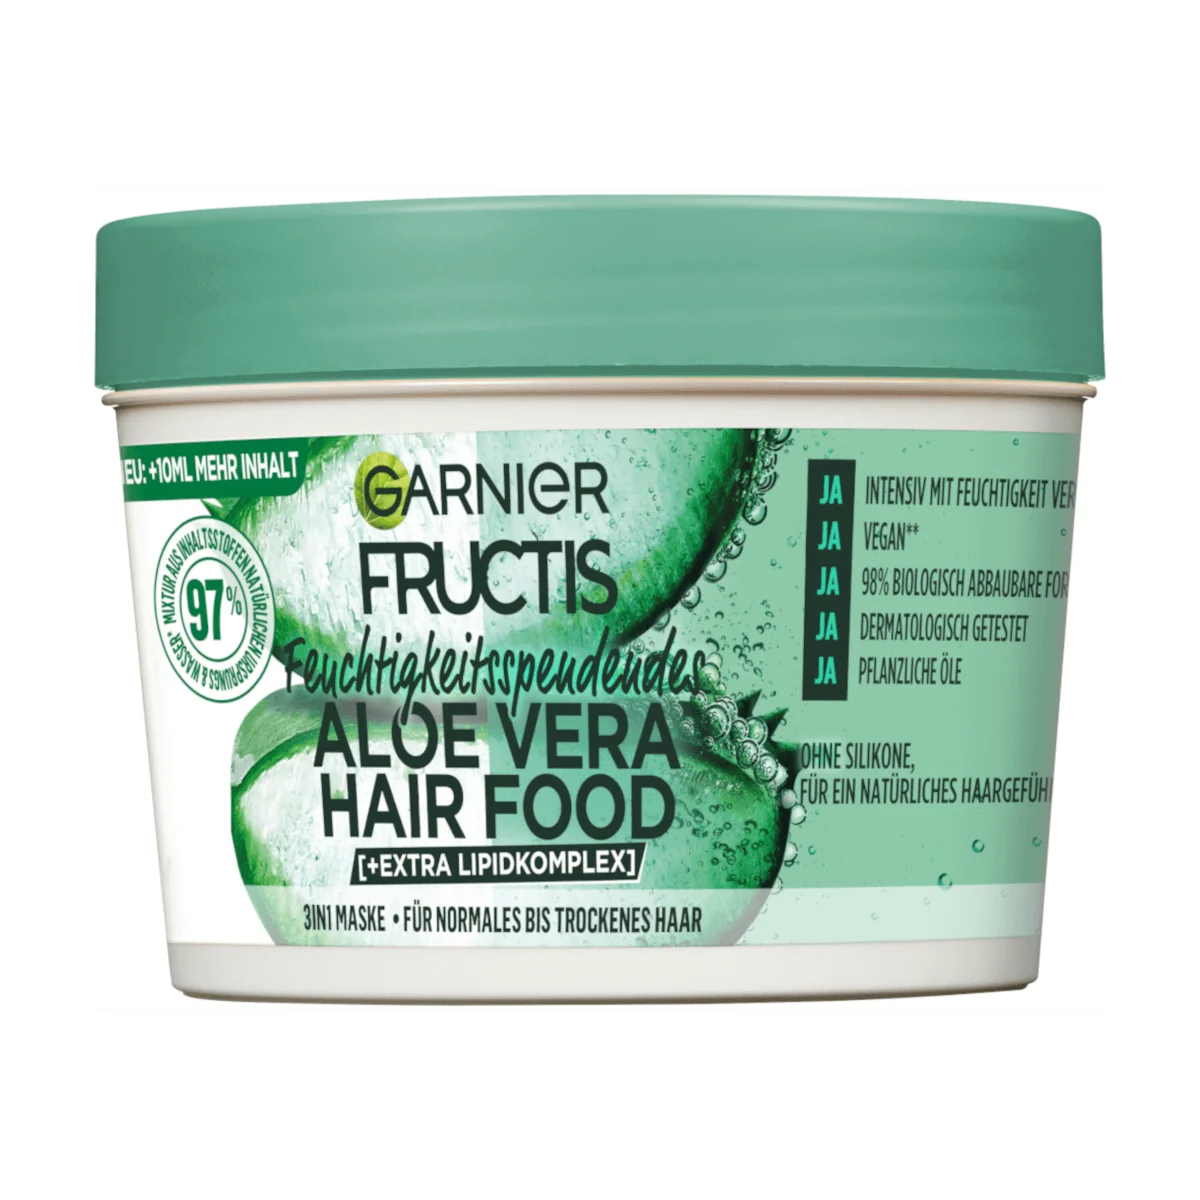 Garnier Fructis Haarkur Aloe Vera Hair Food 3in1 Maske | Haarwasser